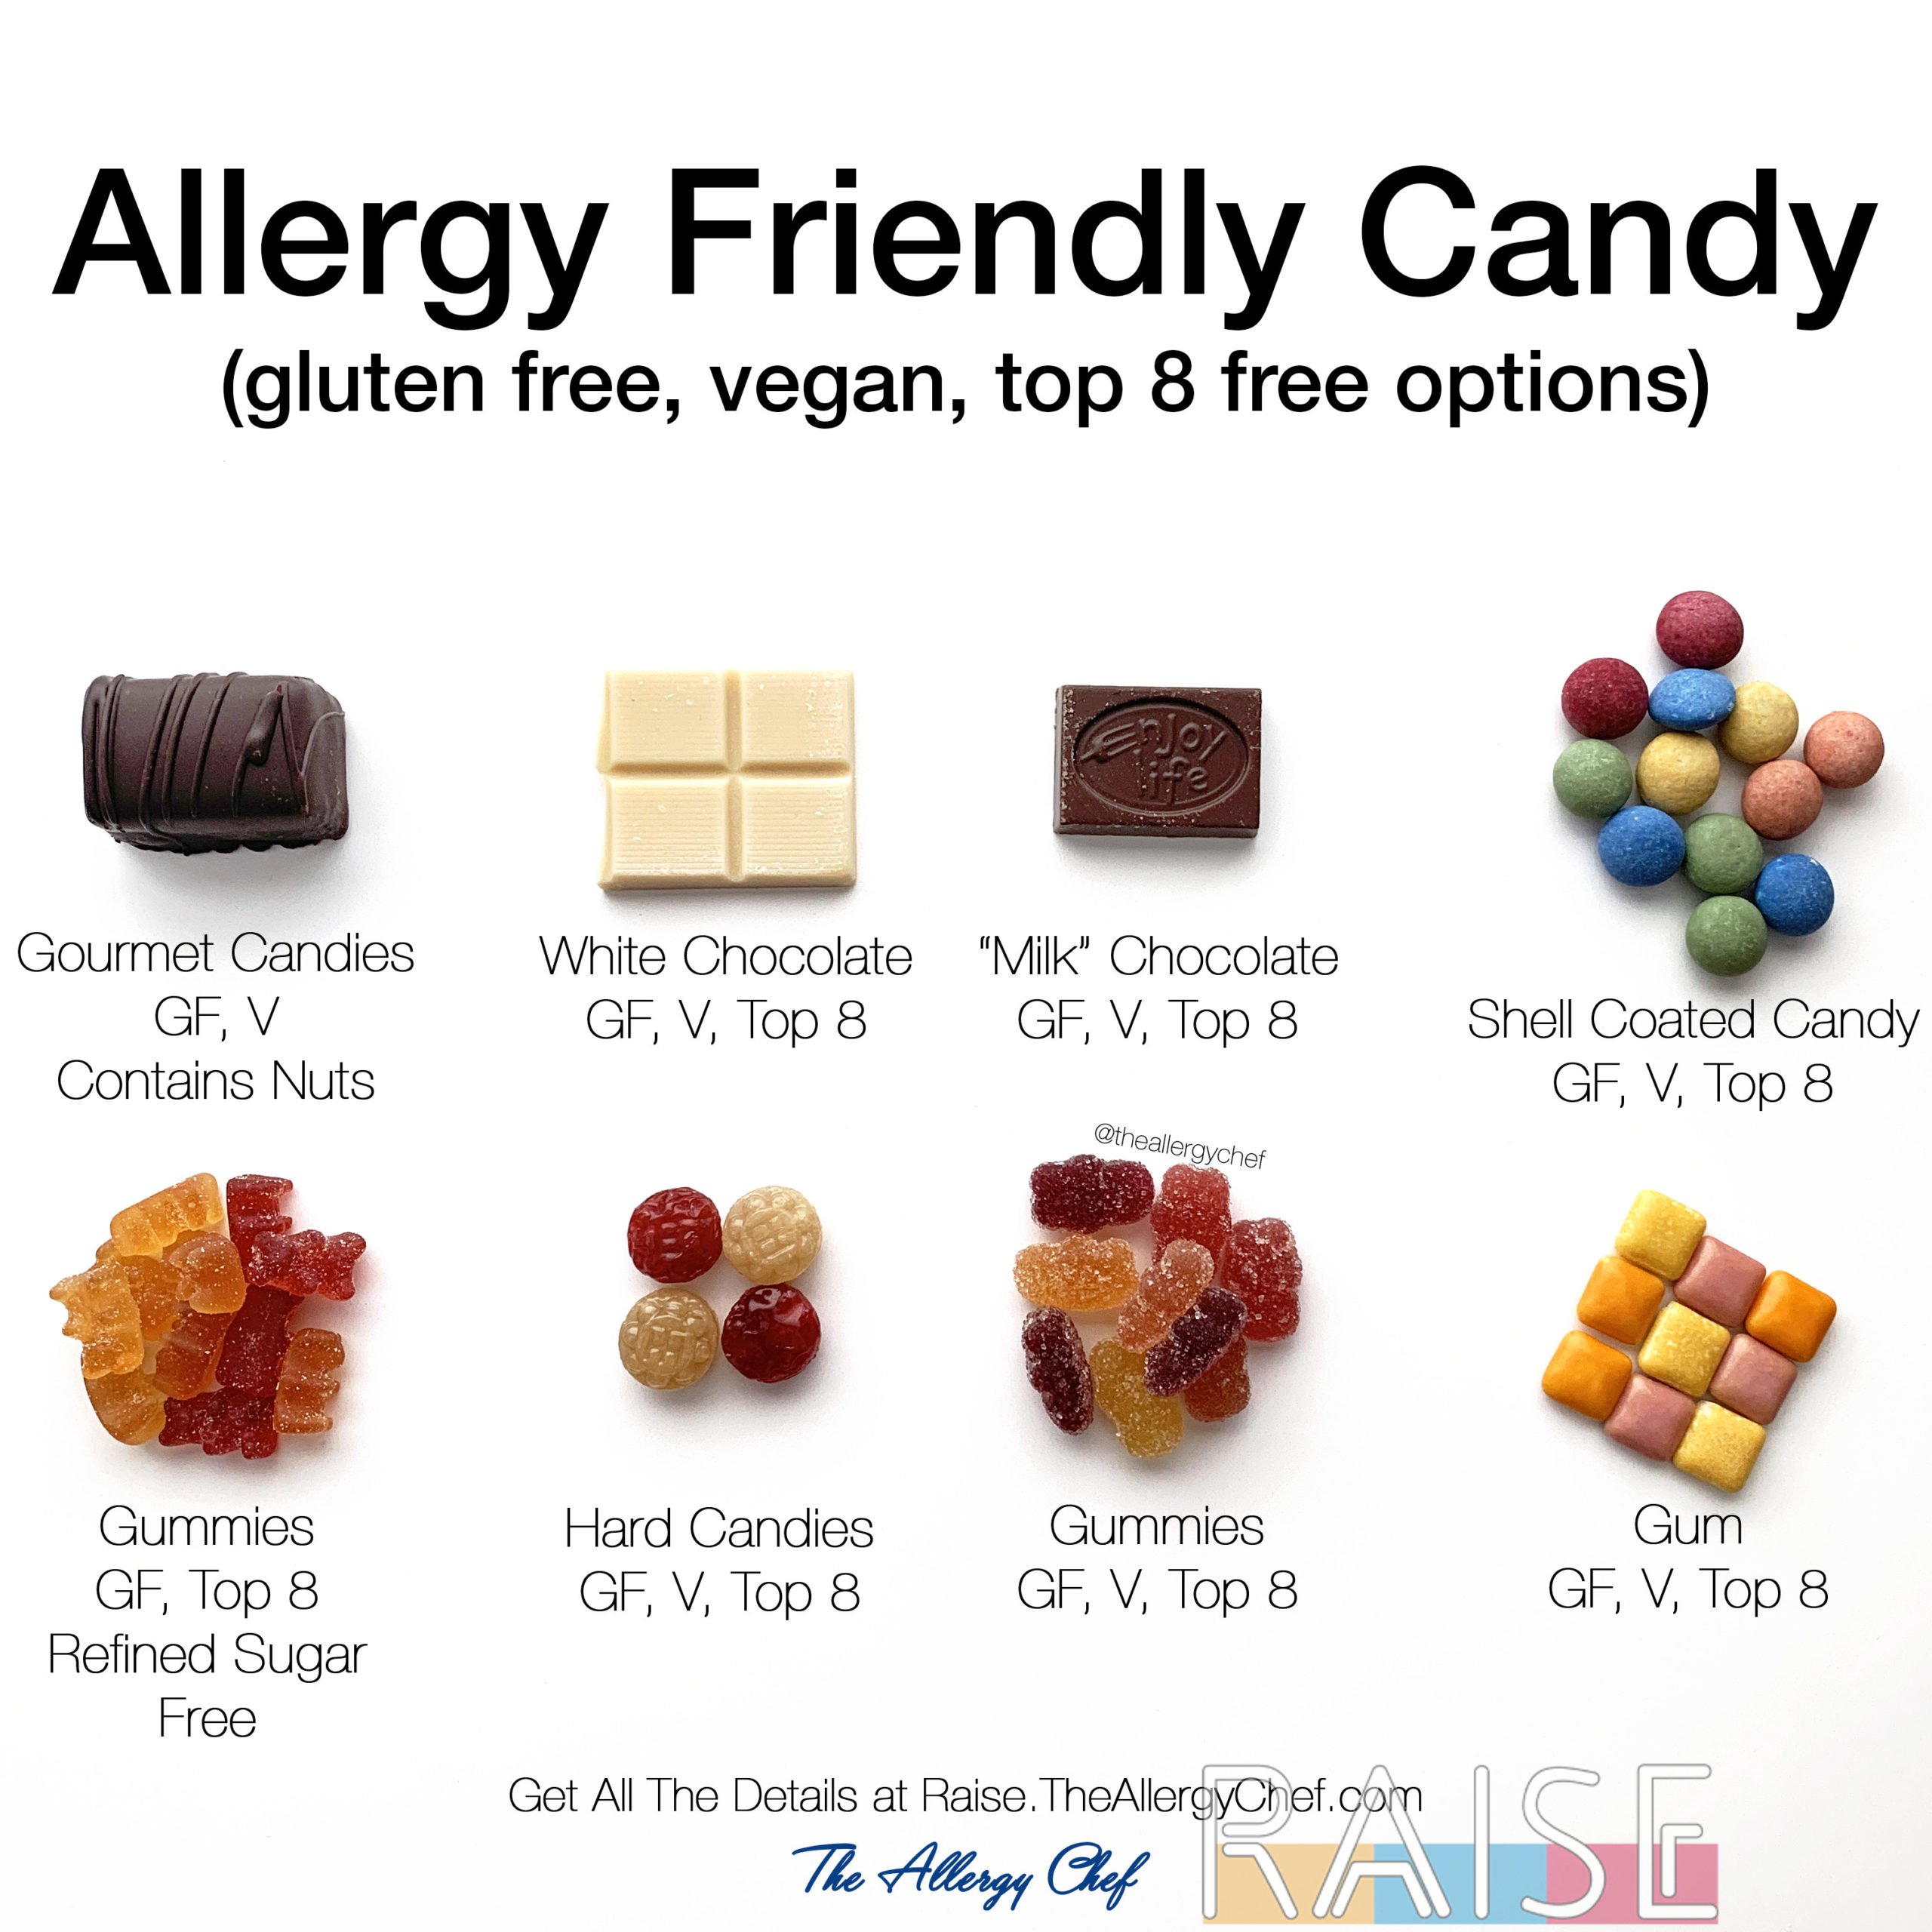 Gluten Free & Allergy Friendly Candy, Vegan Options Too - RAISE